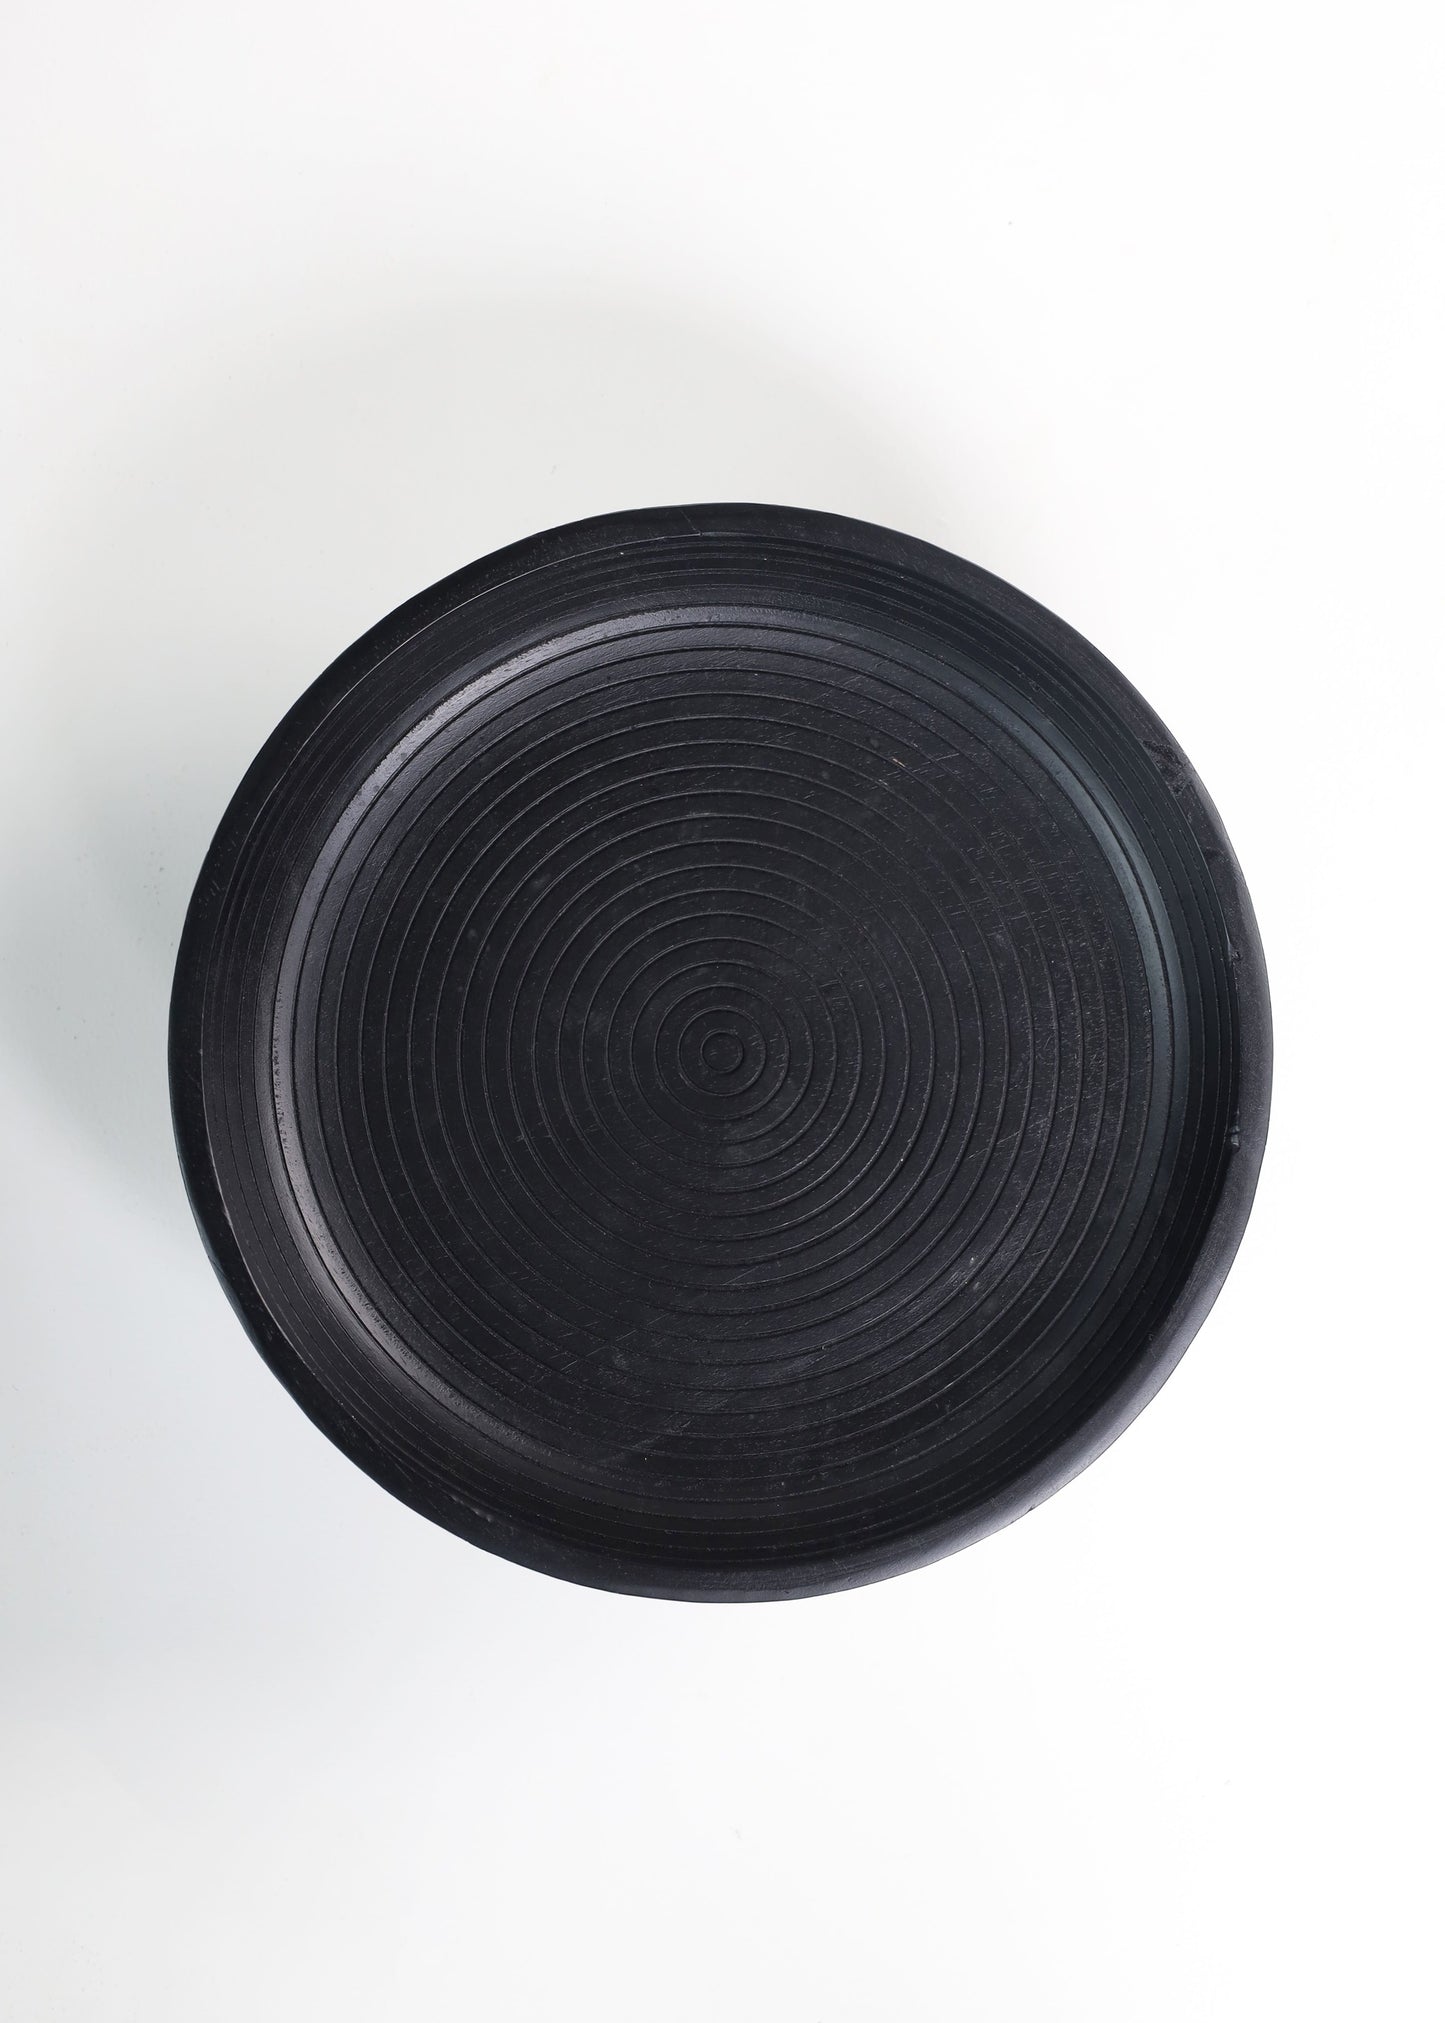 Mango Wood Fruit Platter - Black Texture